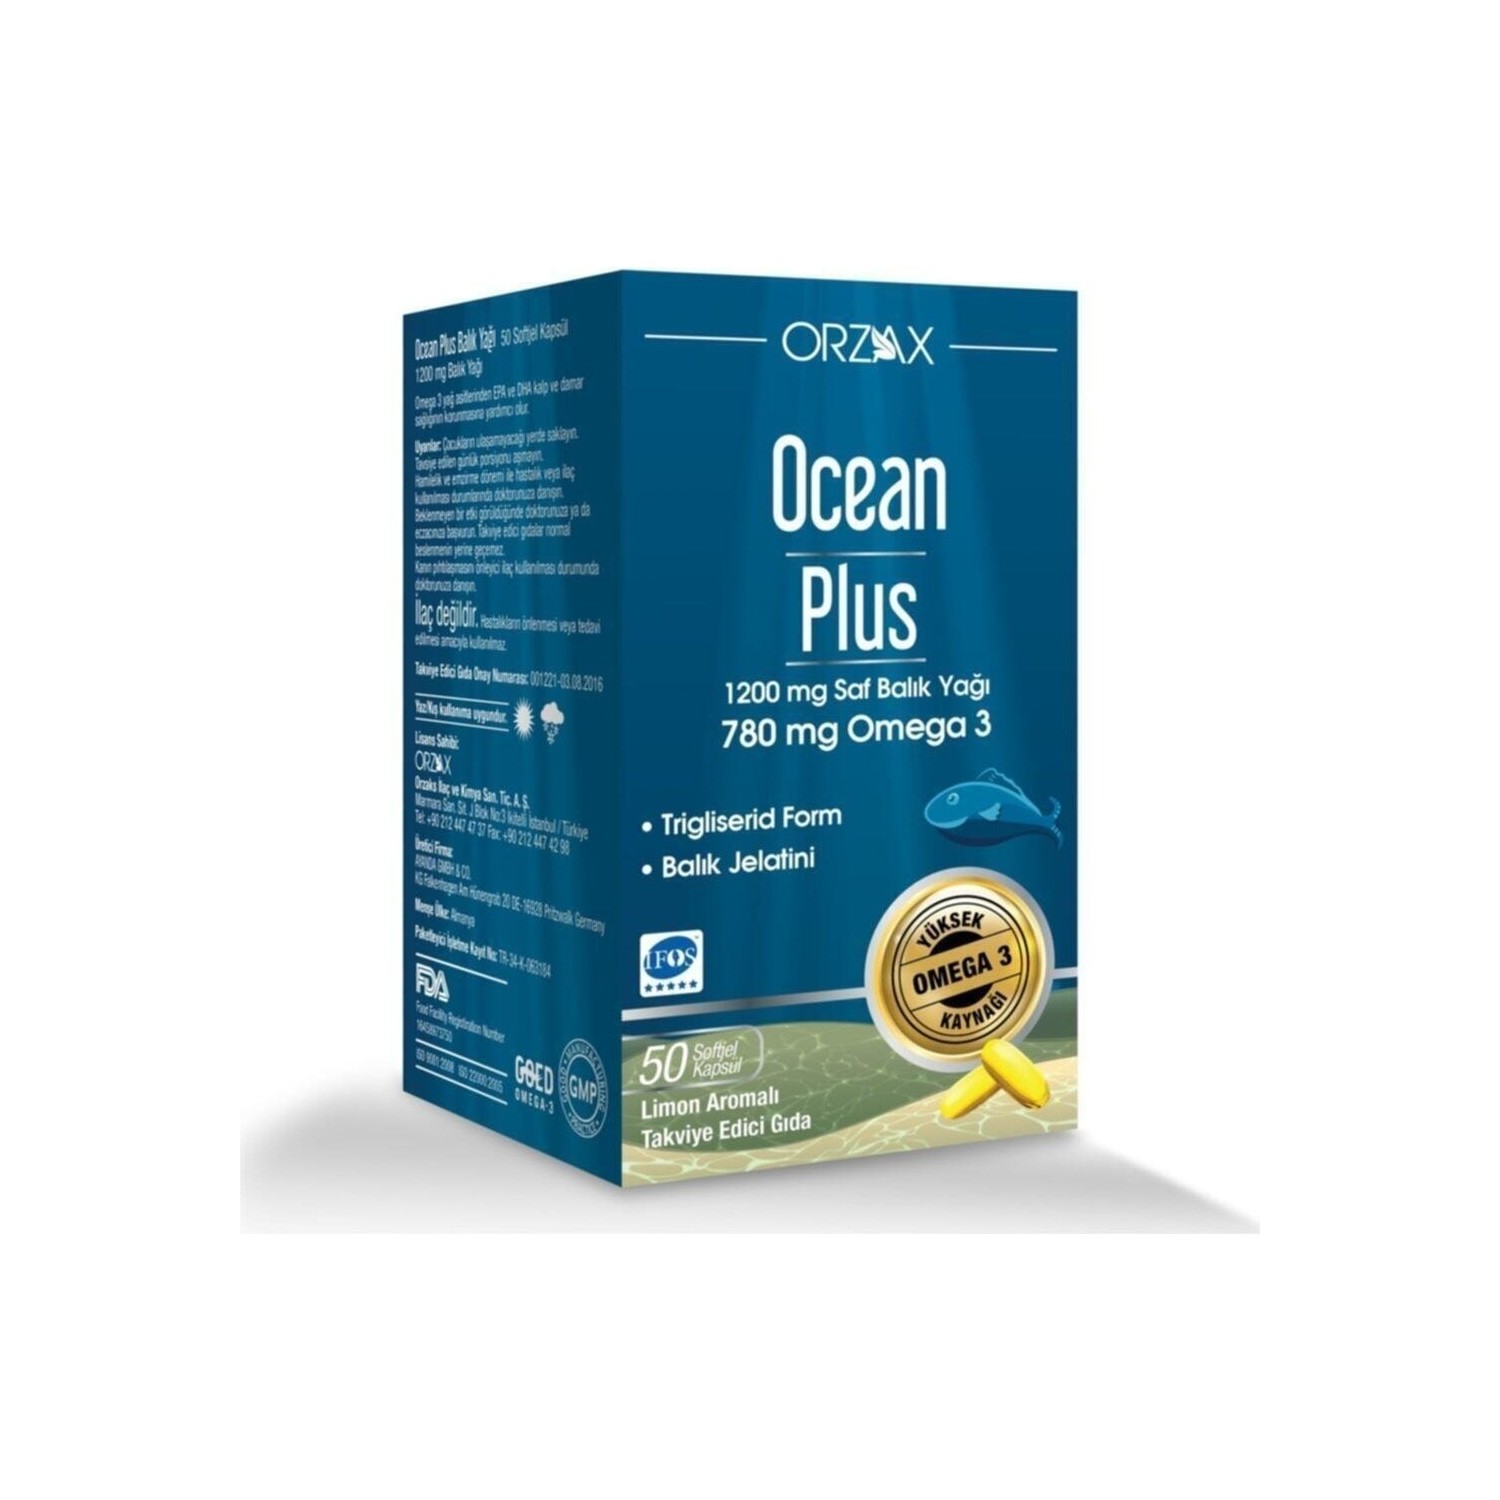 Омега-3 Plus Orzax Ocean 1200 мг, 50 капсул panaseus память без границ 490 мг 50 капсул